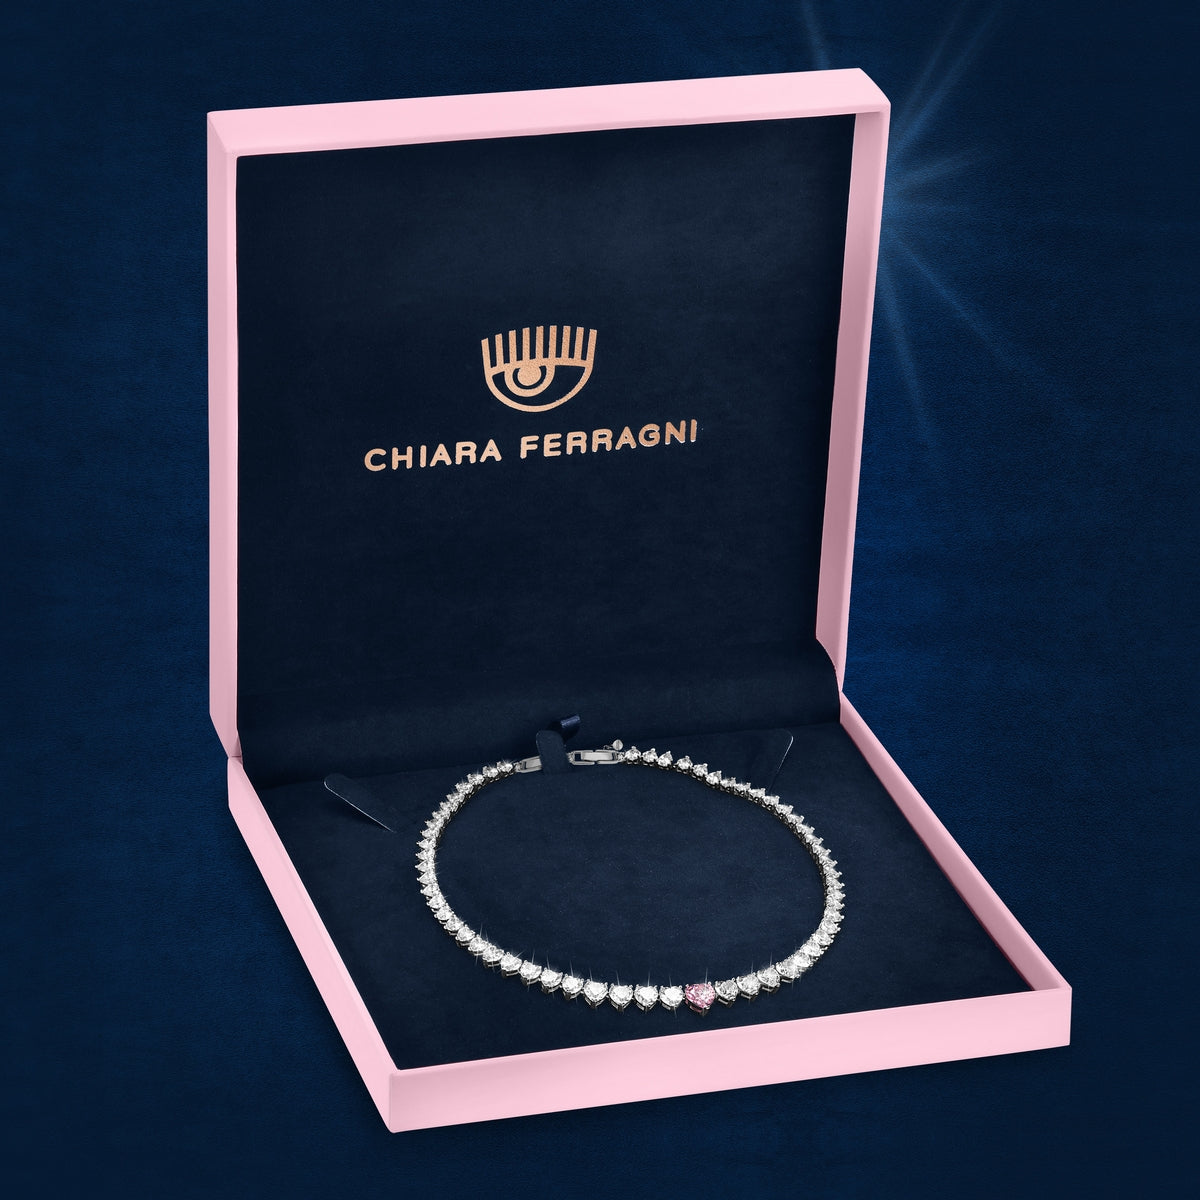 chiara ferragni chain necklace yg big chain with eyelike tag in white crystals 38cm + 7